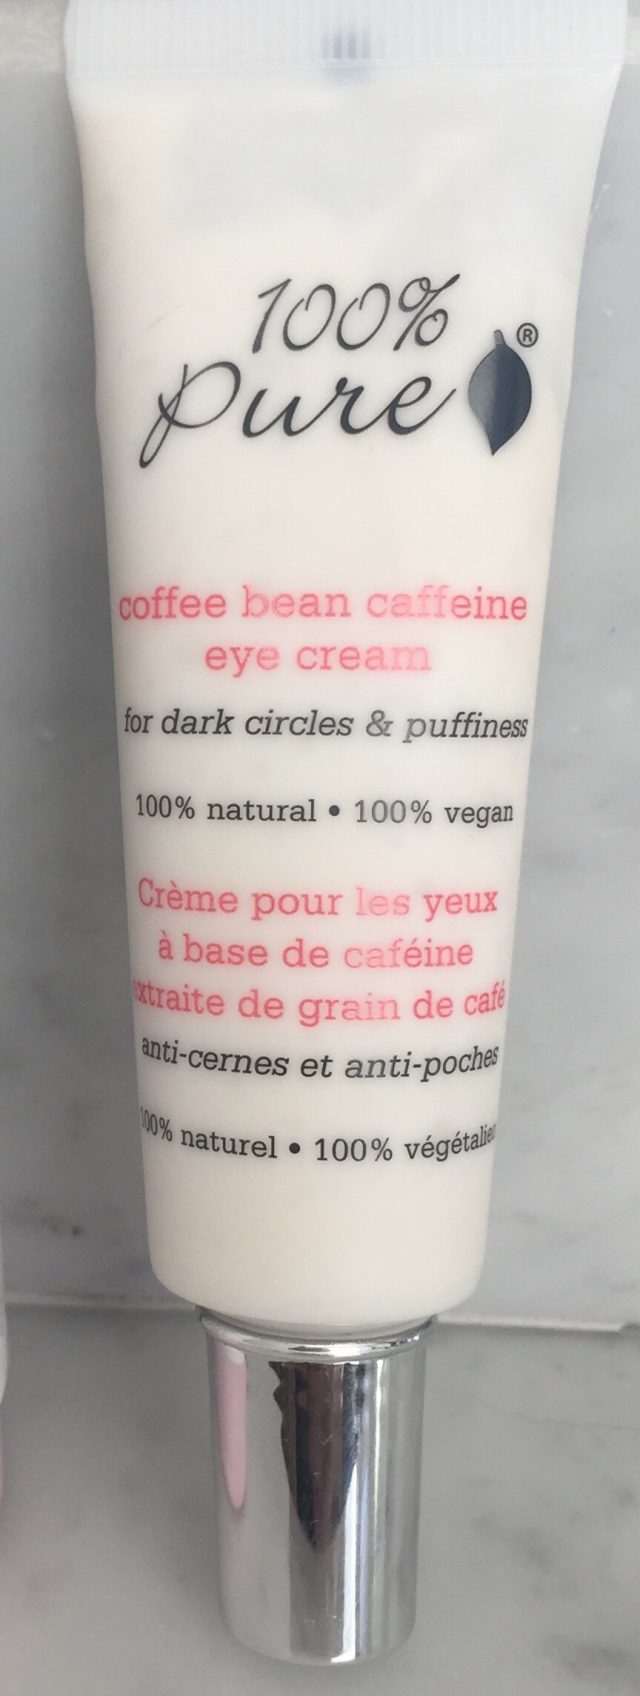 100% Pure eye cream review